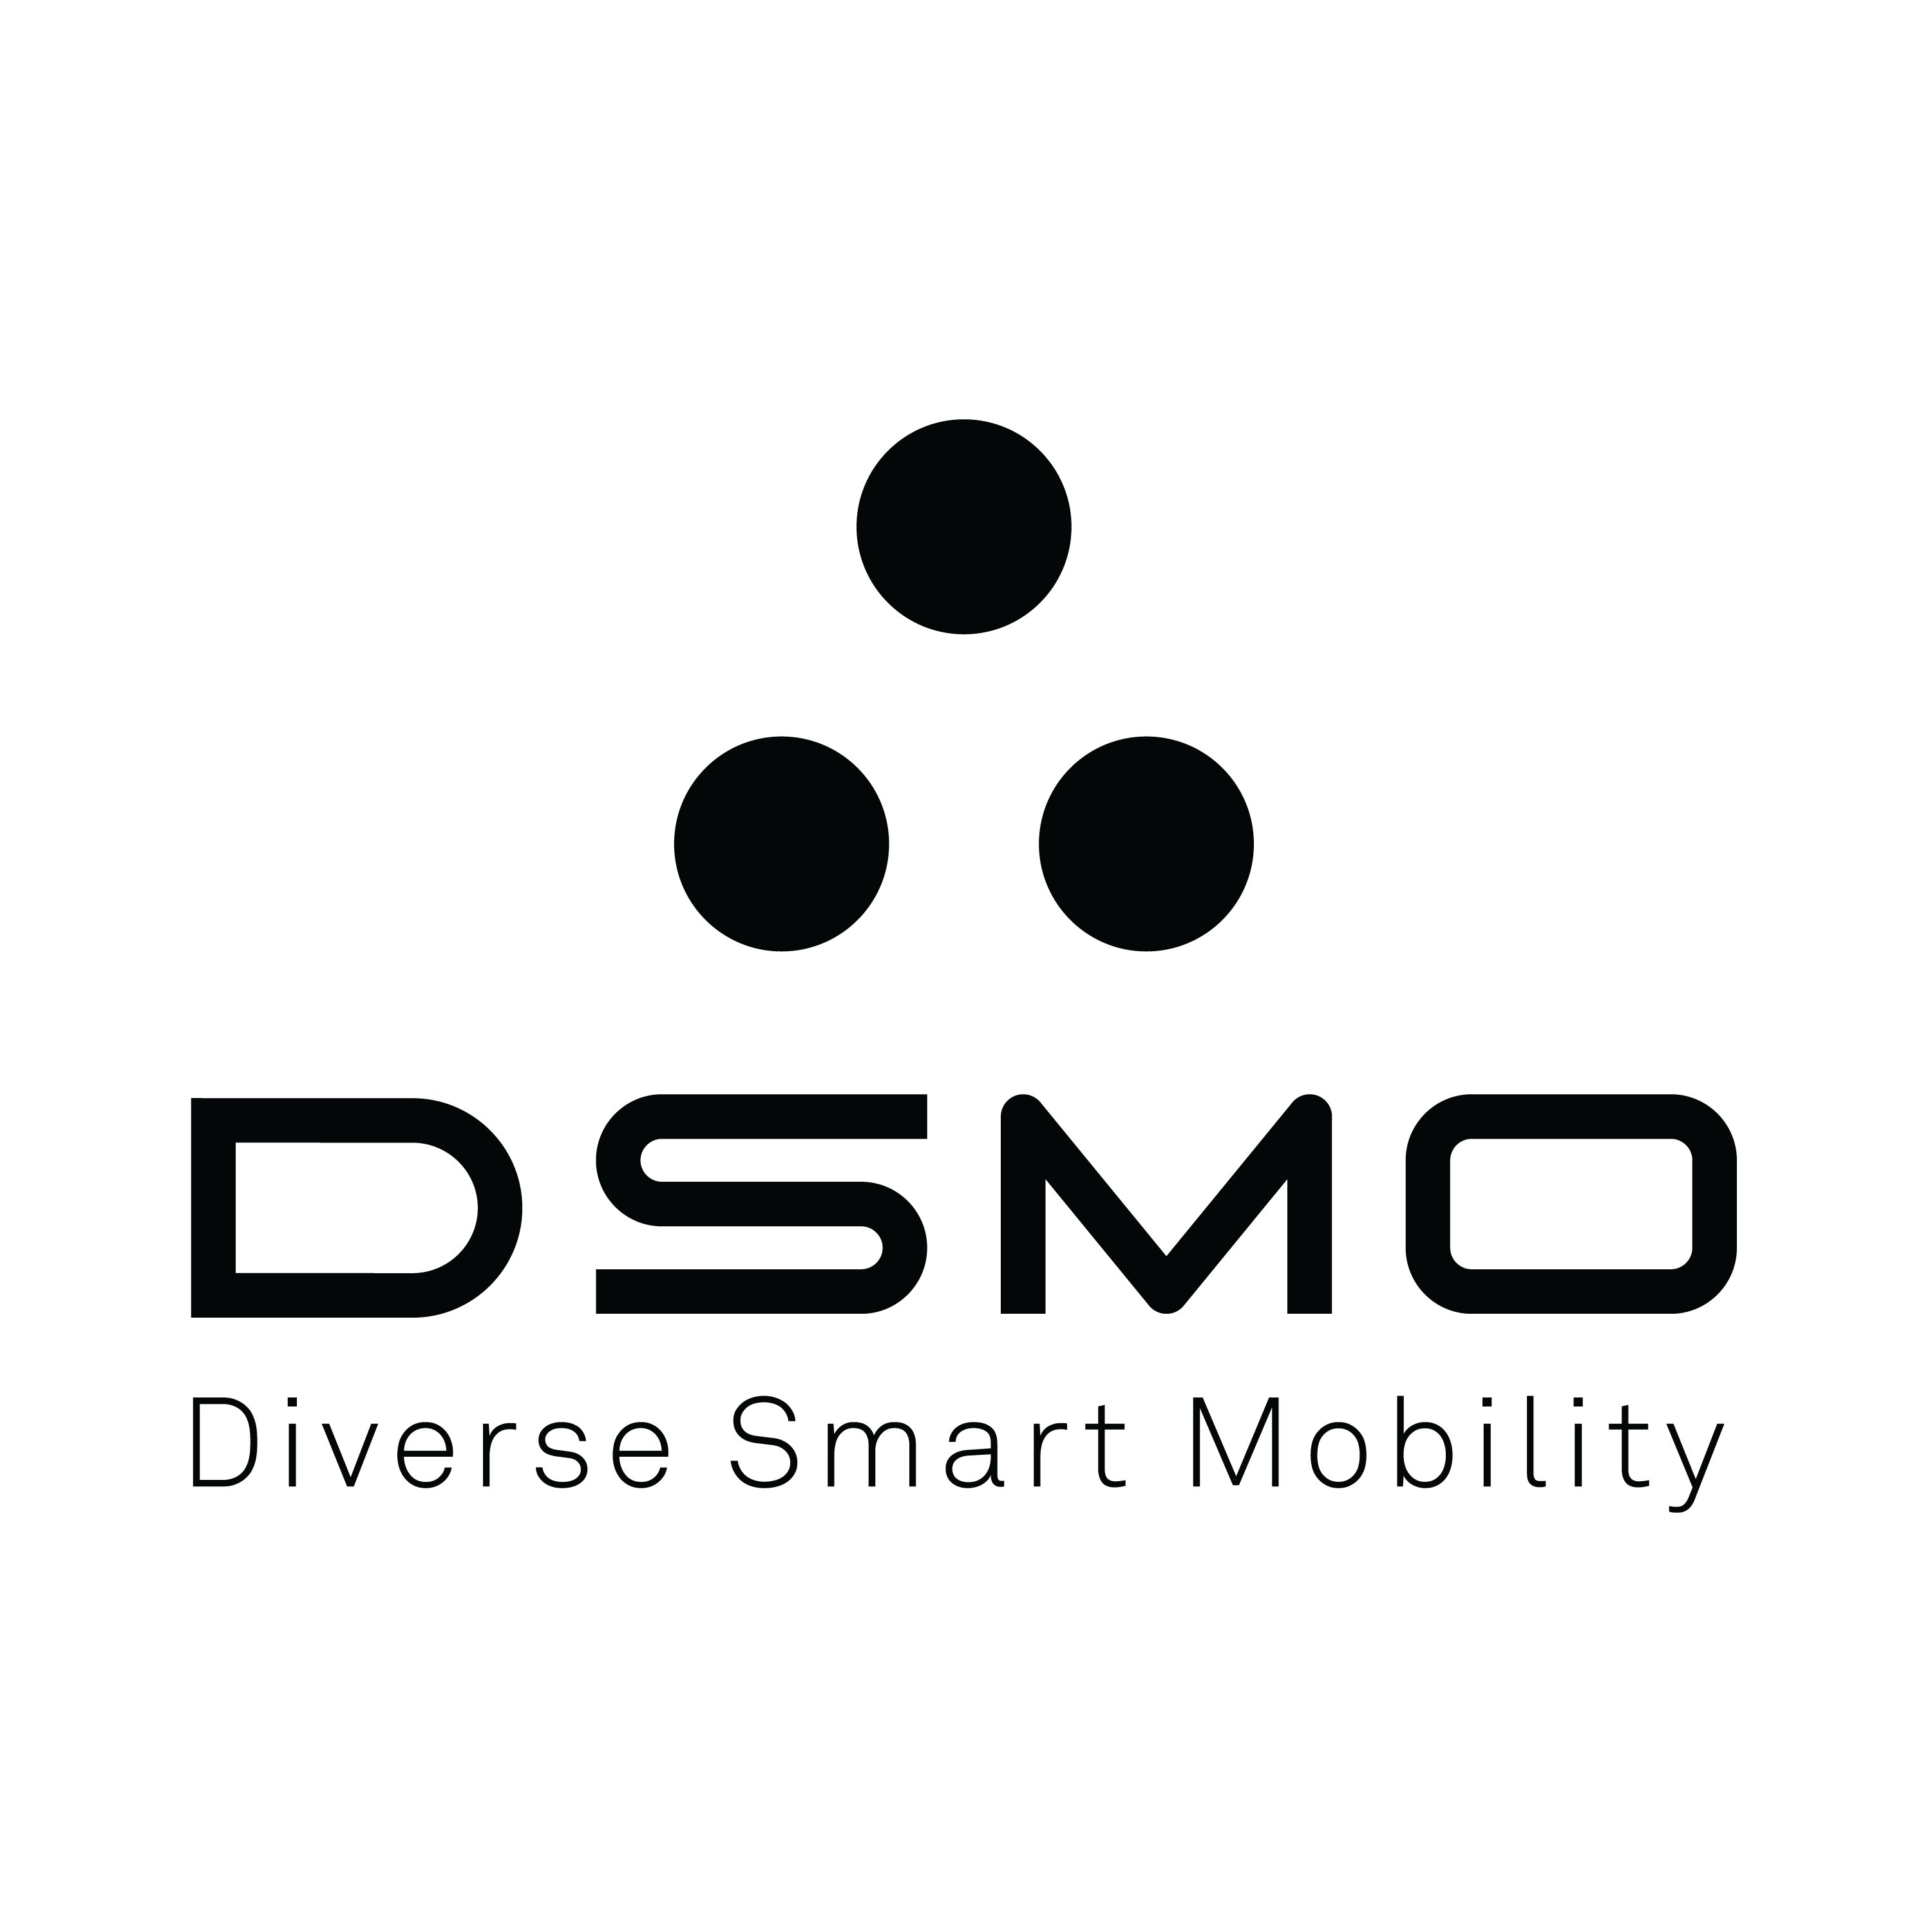  DSMO DIVERSE SMART MOBILITY